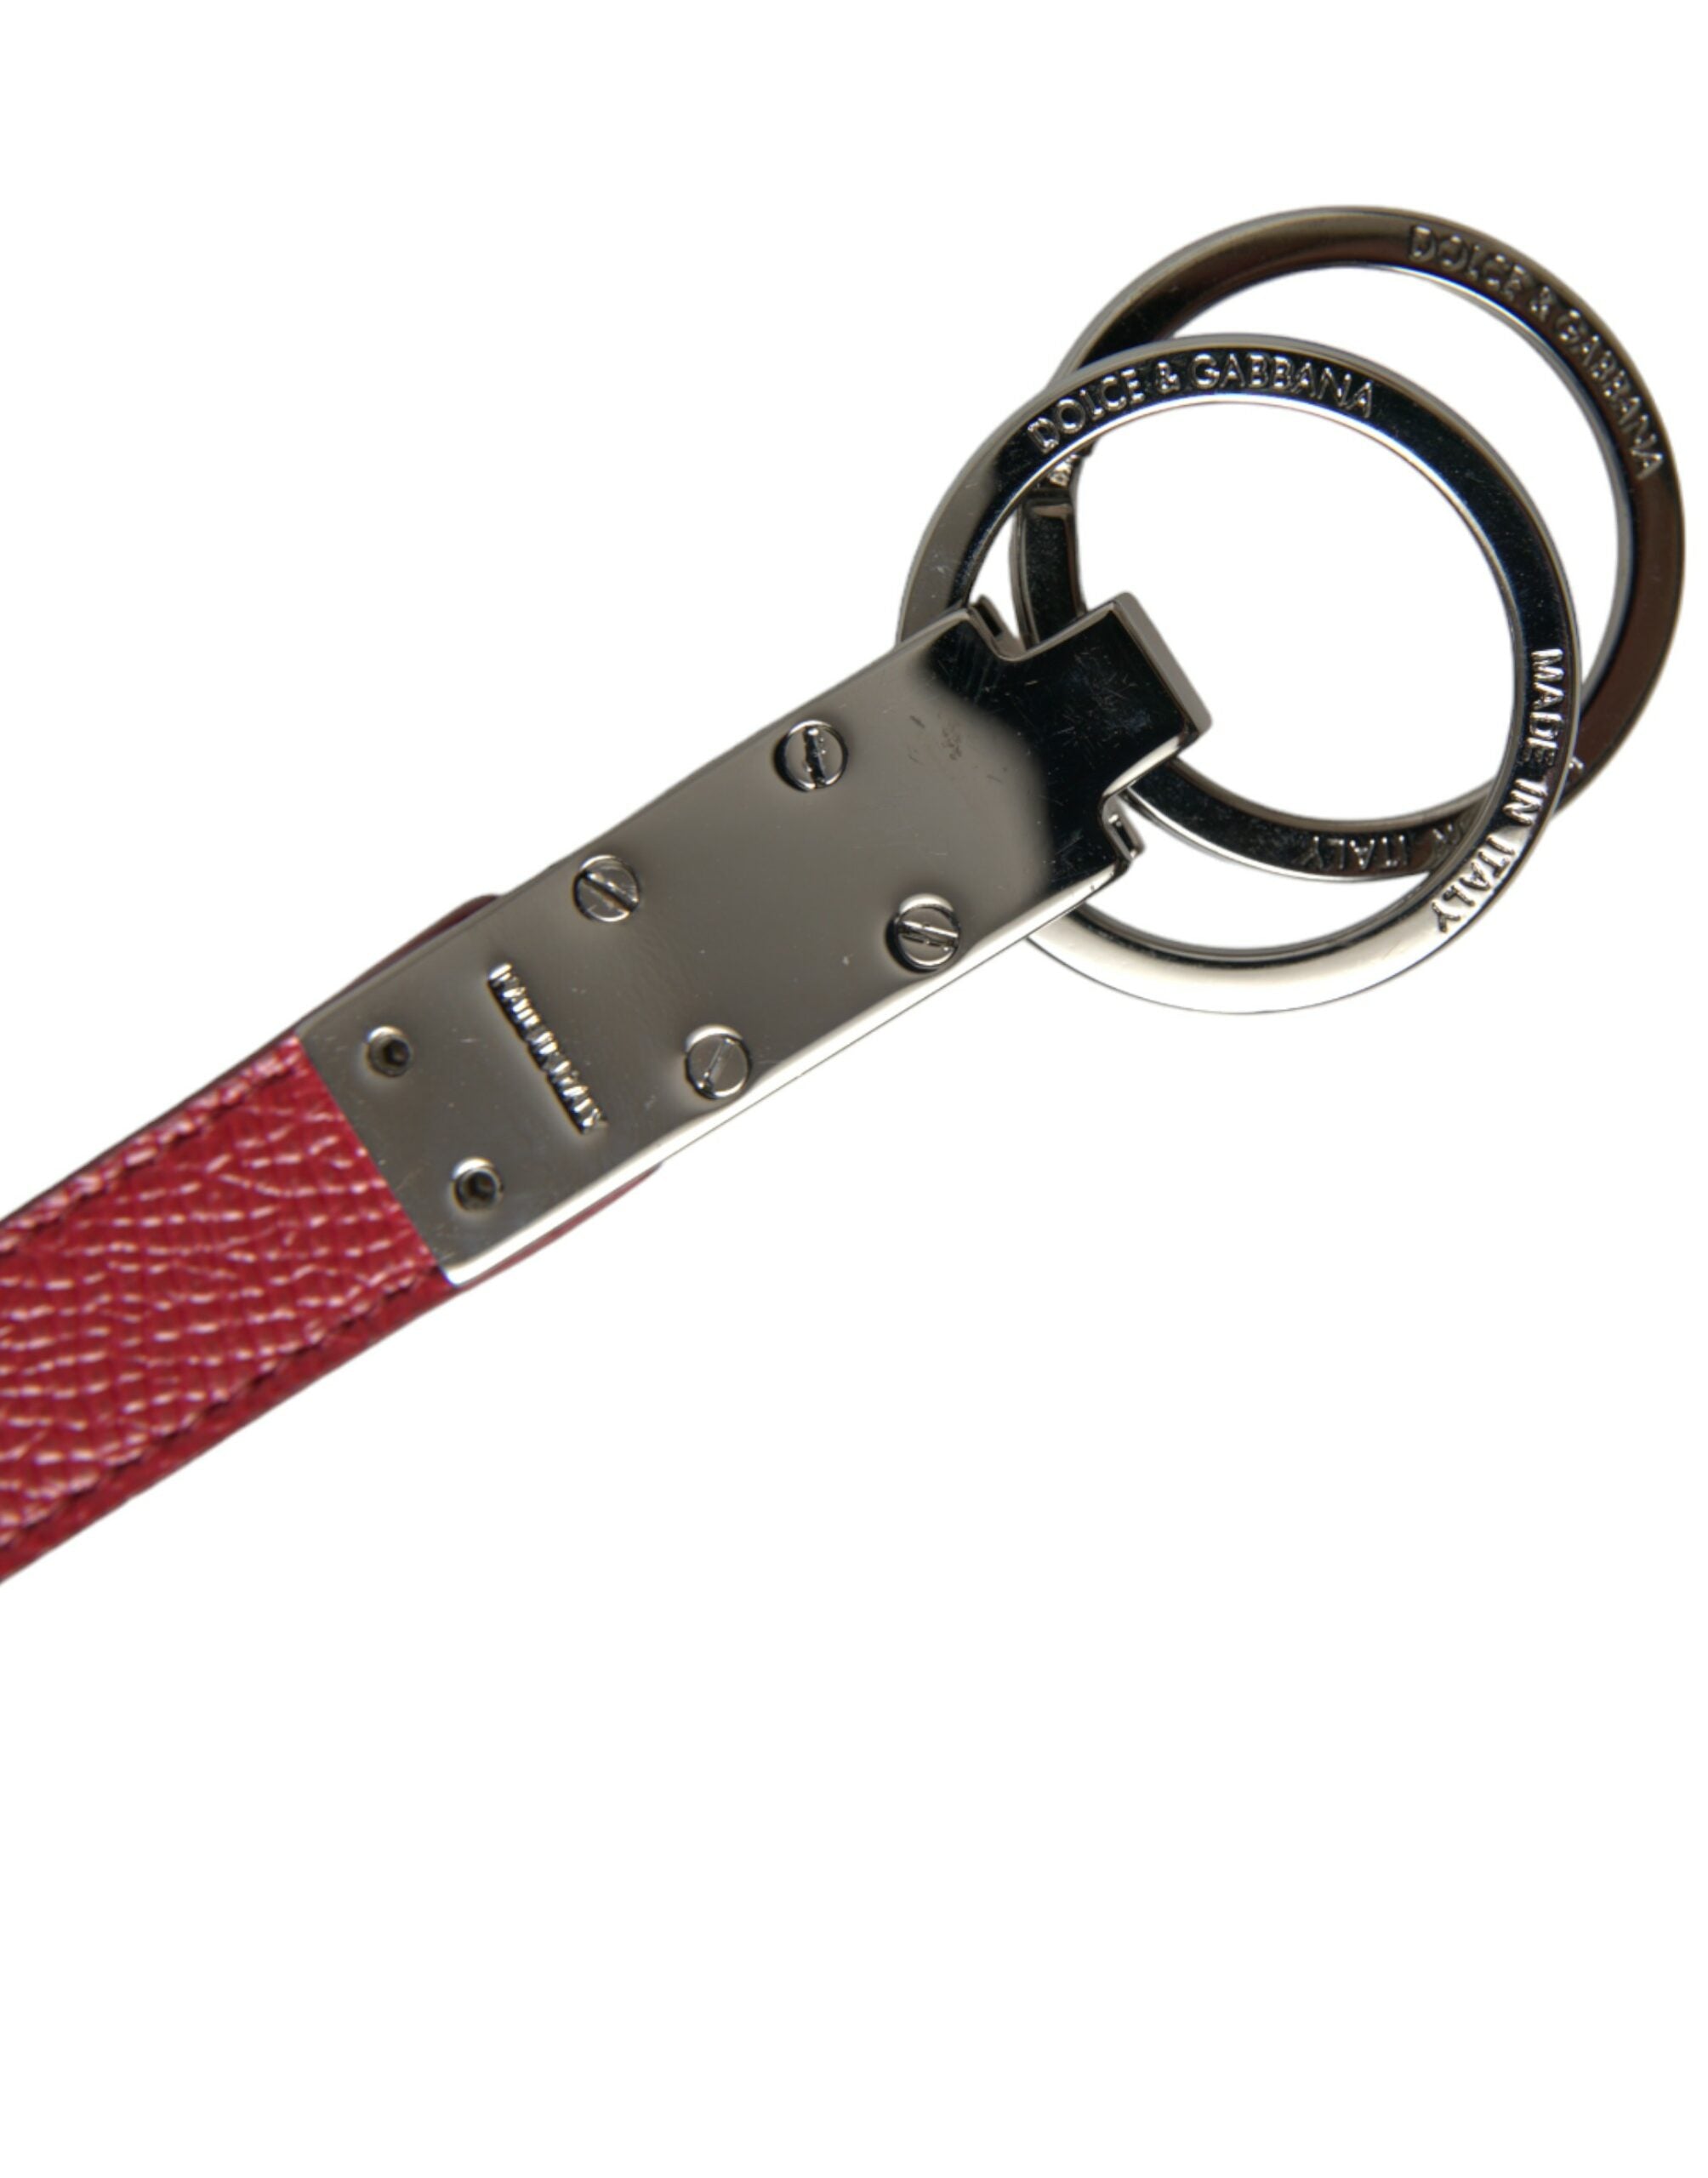 Dolce & Gabbana Elegant Red Leather Trifold Key Holder Case